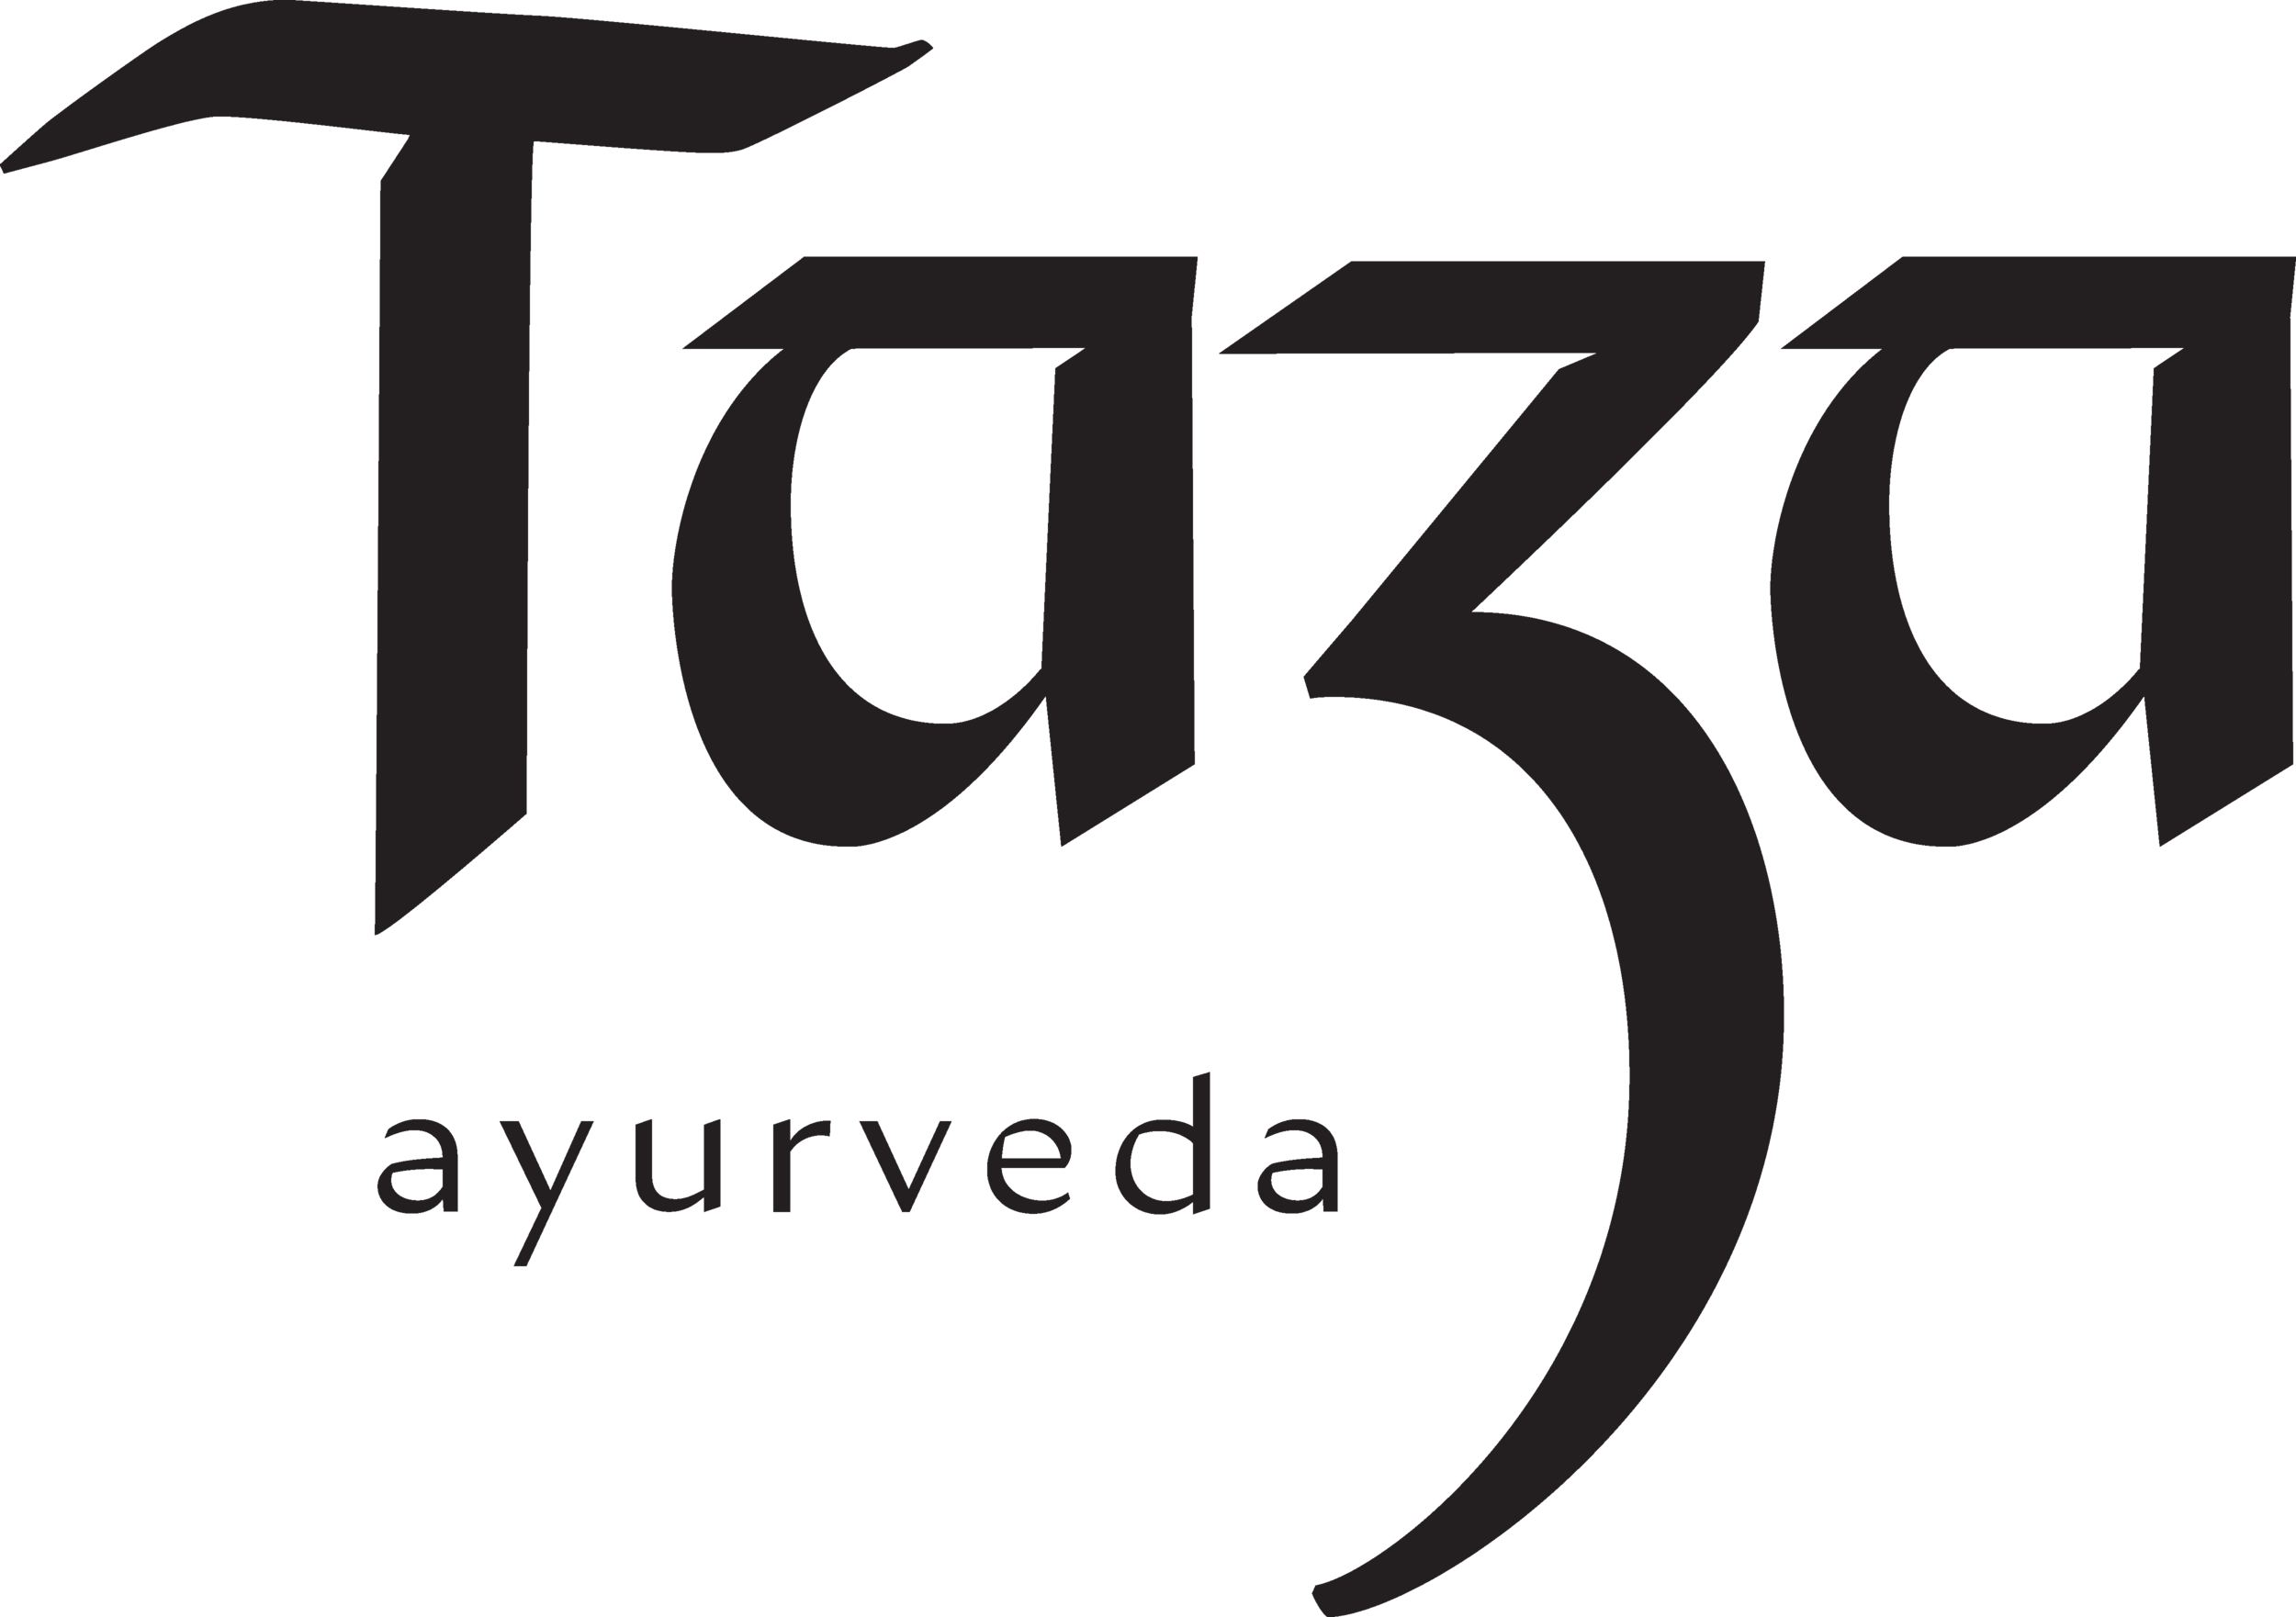 Taza-Logo-Black-TransparentBG.png